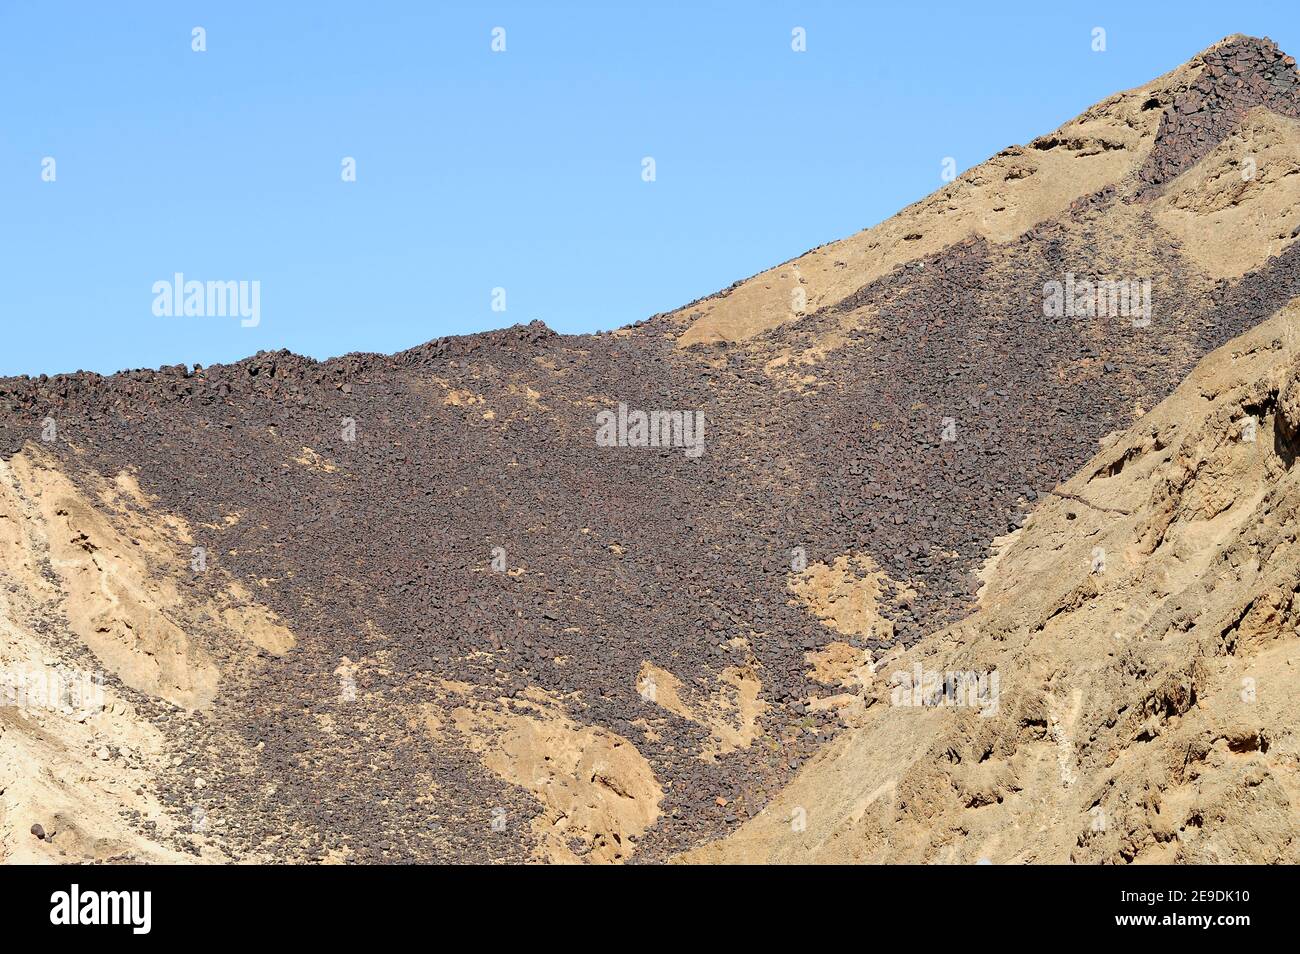 Diabase dike near Swakopmund, Namibia. Diabase, dolerite, ophite or microgabbro is a subvolcanic rock. Stock Photo